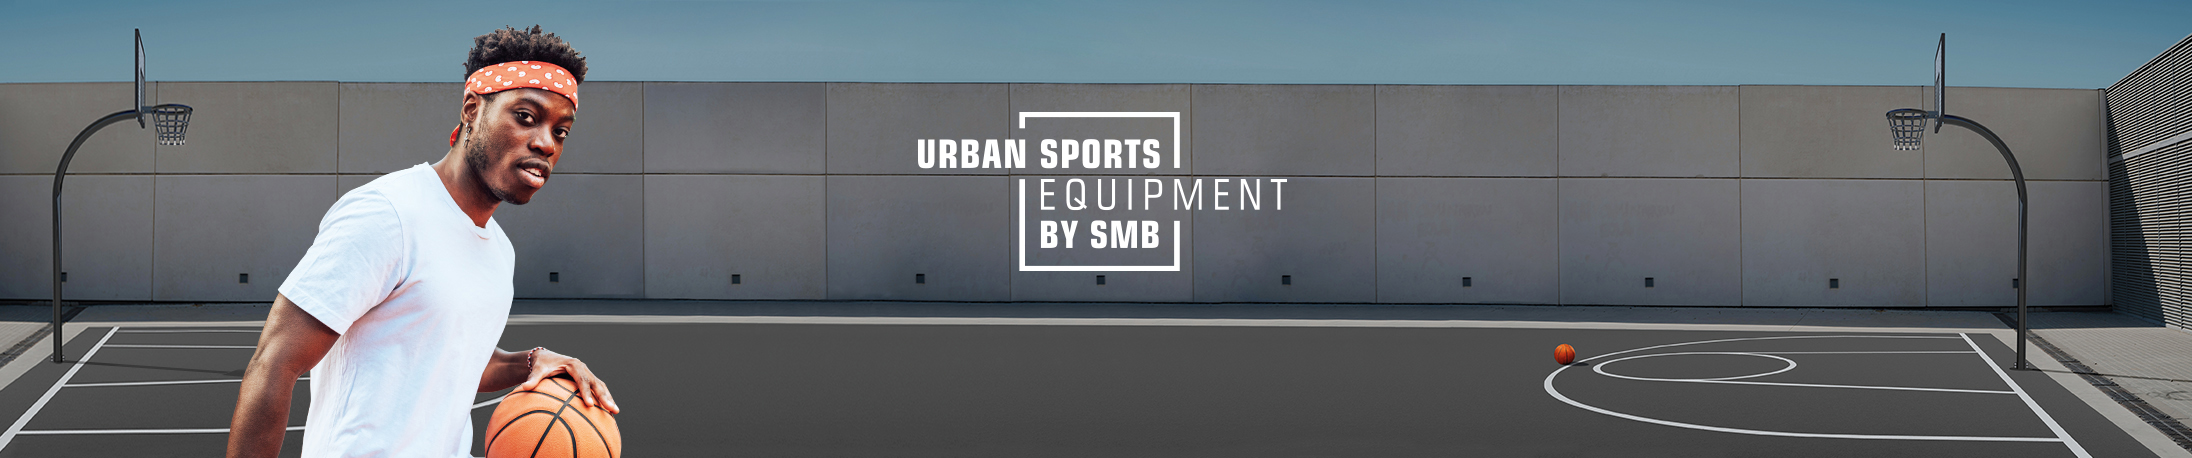 urban sports equipment